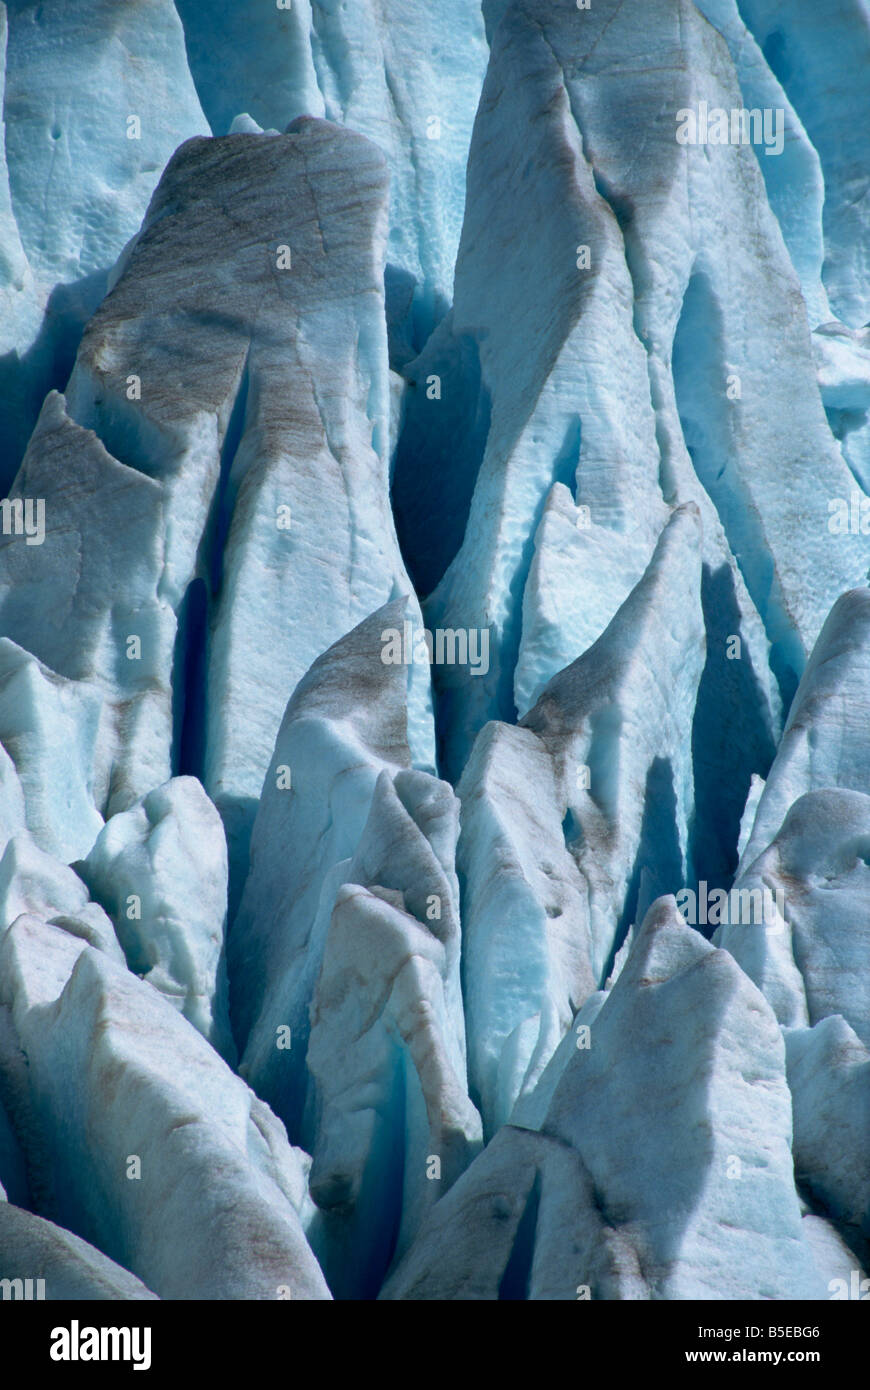 Crevasses Mendenhall Glacier Juneau Icefield Alaska United States of America North America Stock Photo